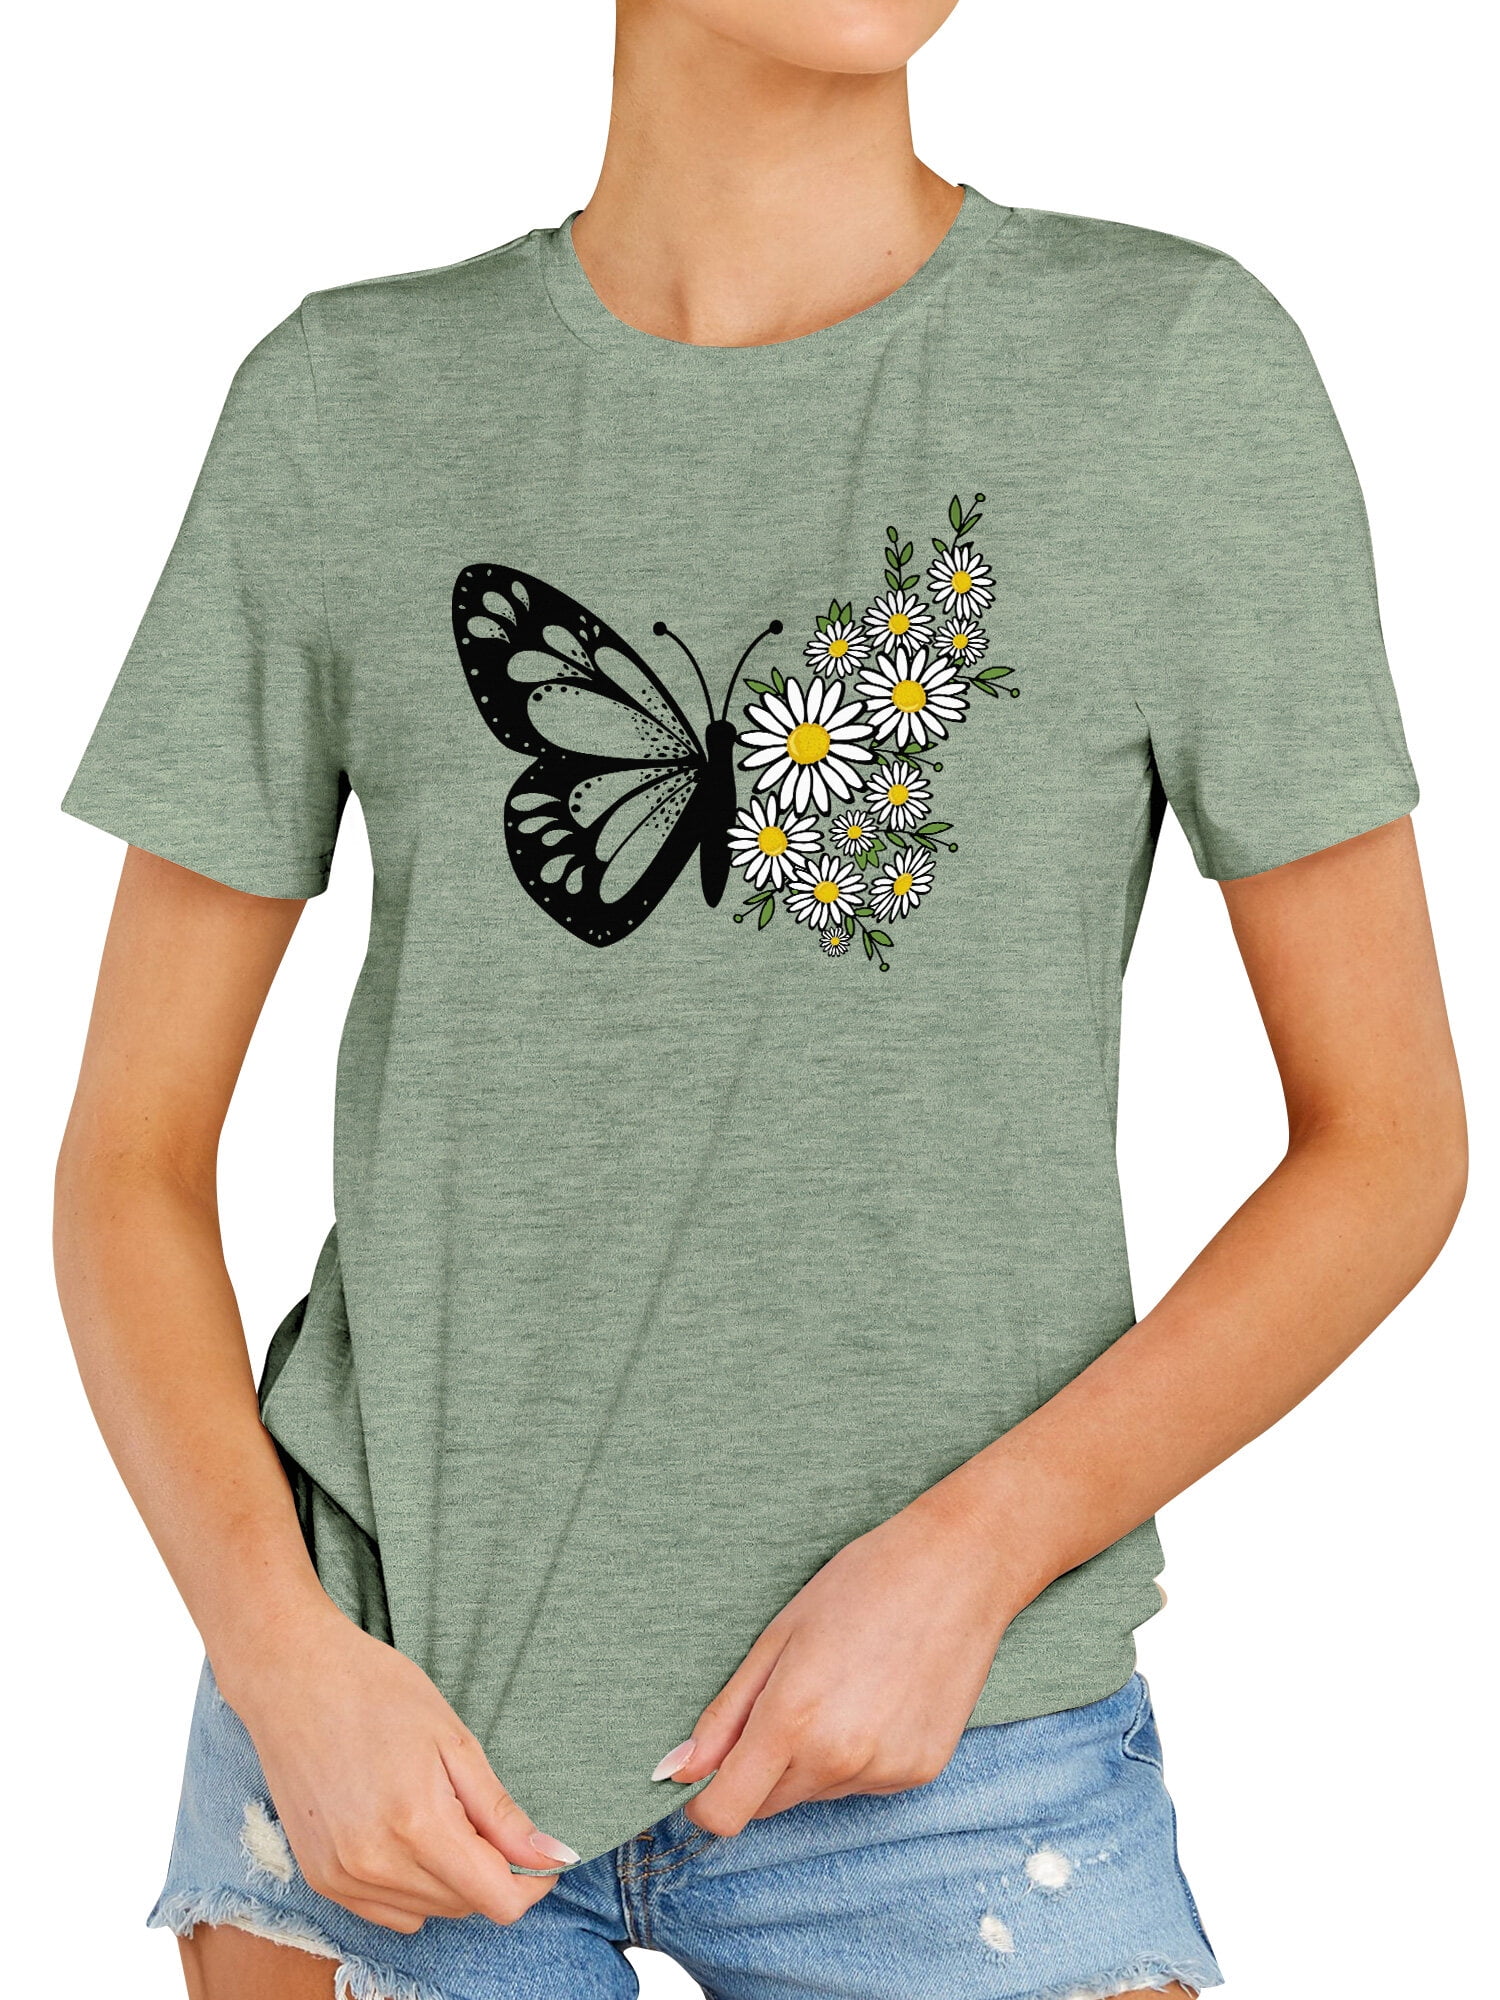 Twzh Women Daisies Butterfly Graphic Print T Shirt Short Sleeve Plain